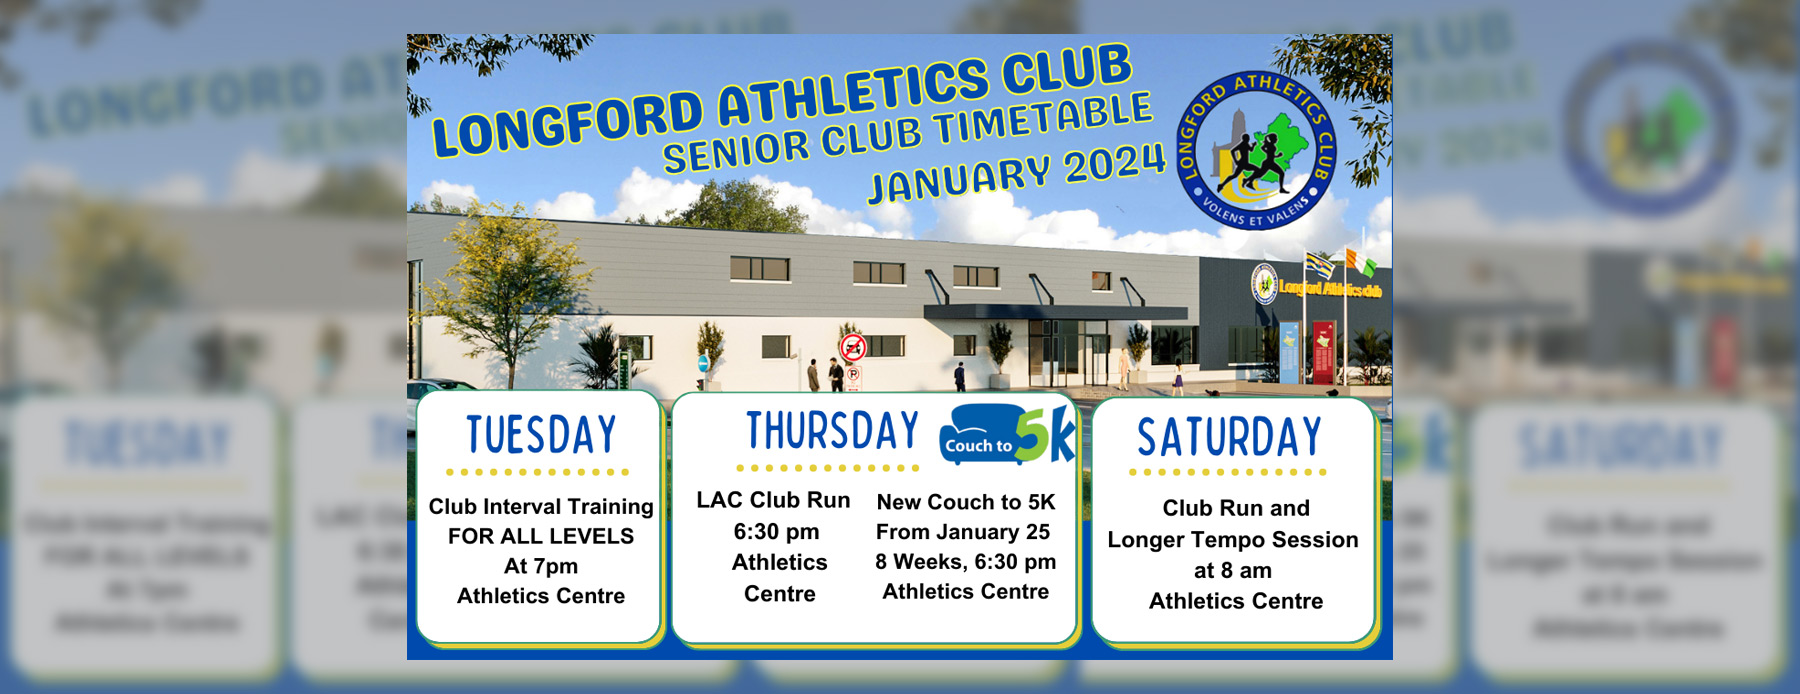 Senior Club Timetable January 2024